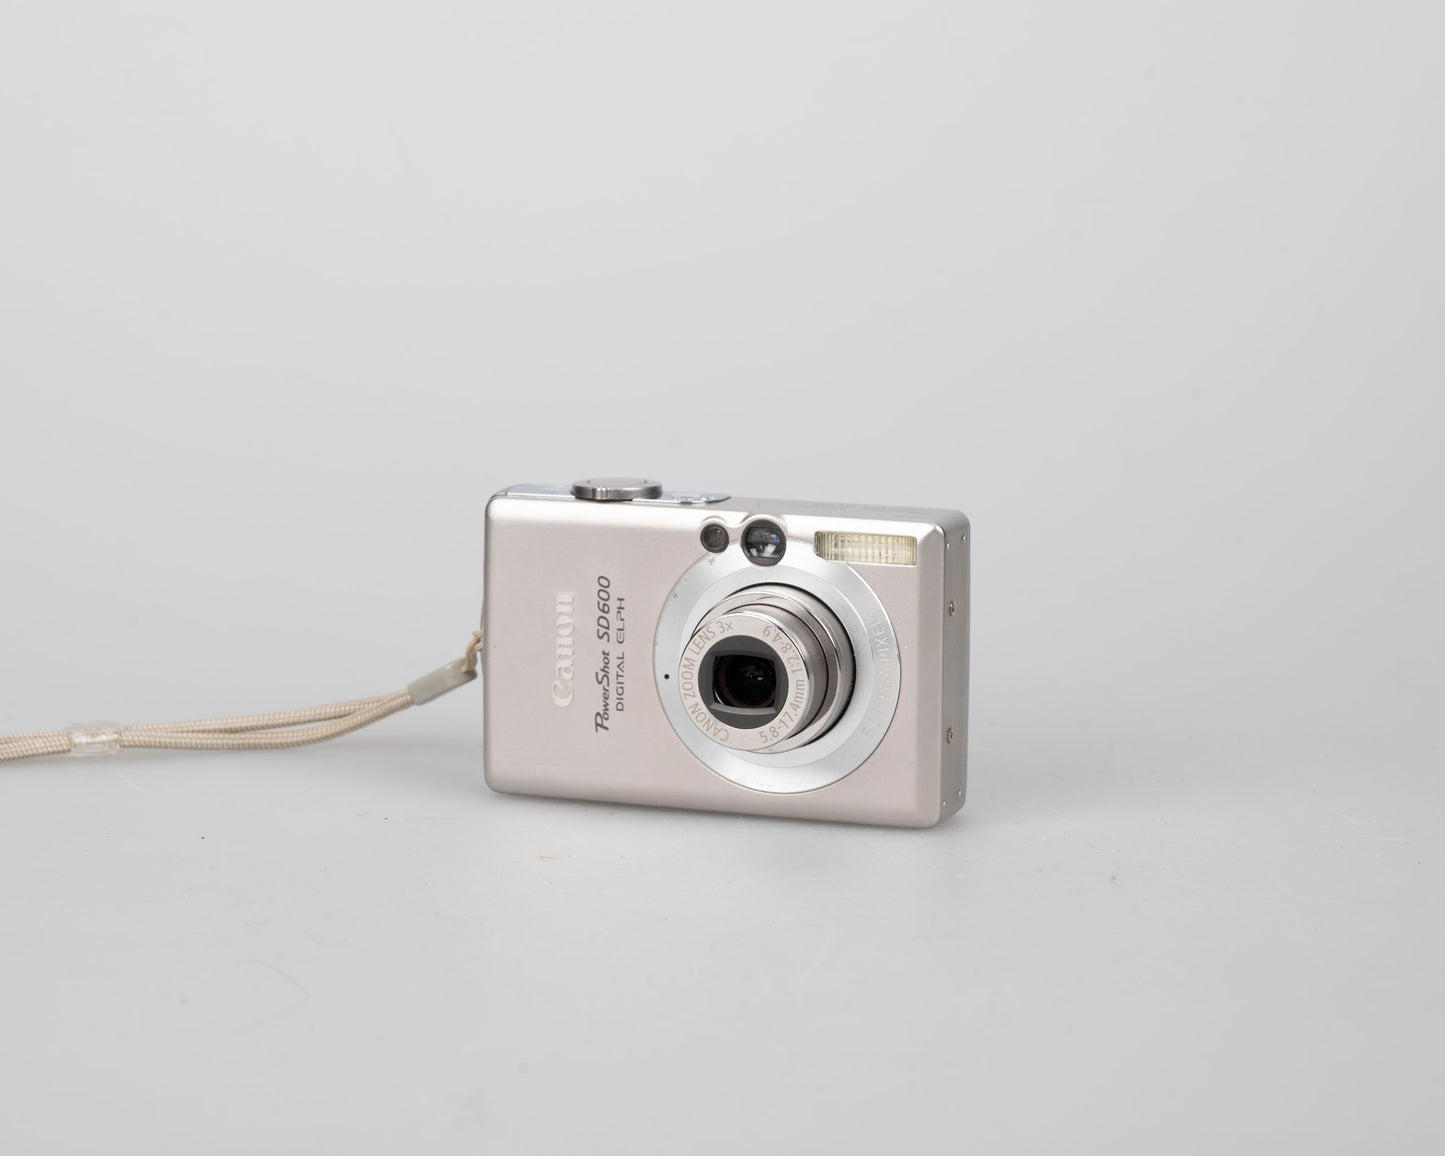 Canon Powershot SD600 Digital Elph 6MP CCD digicam w/ 2GB SD card + battery + charger